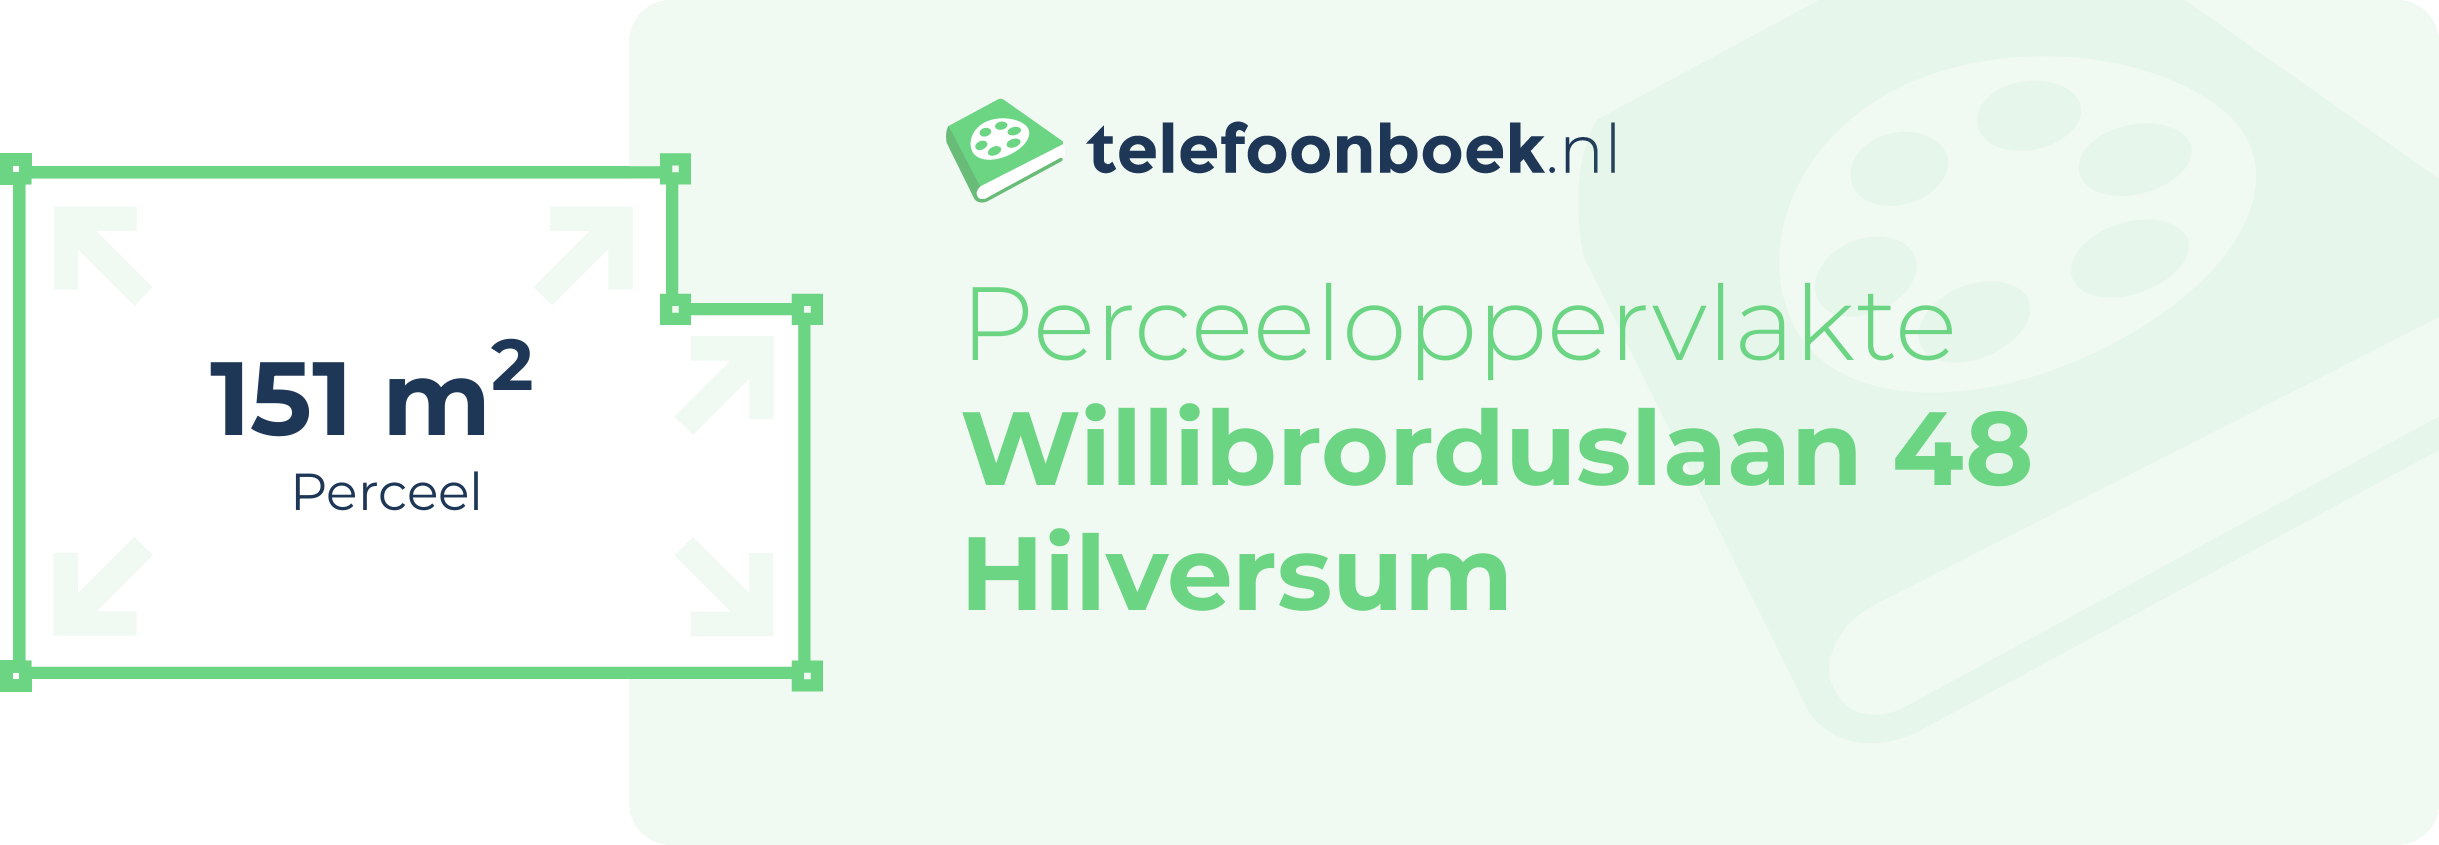 Perceeloppervlakte Willibrorduslaan 48 Hilversum